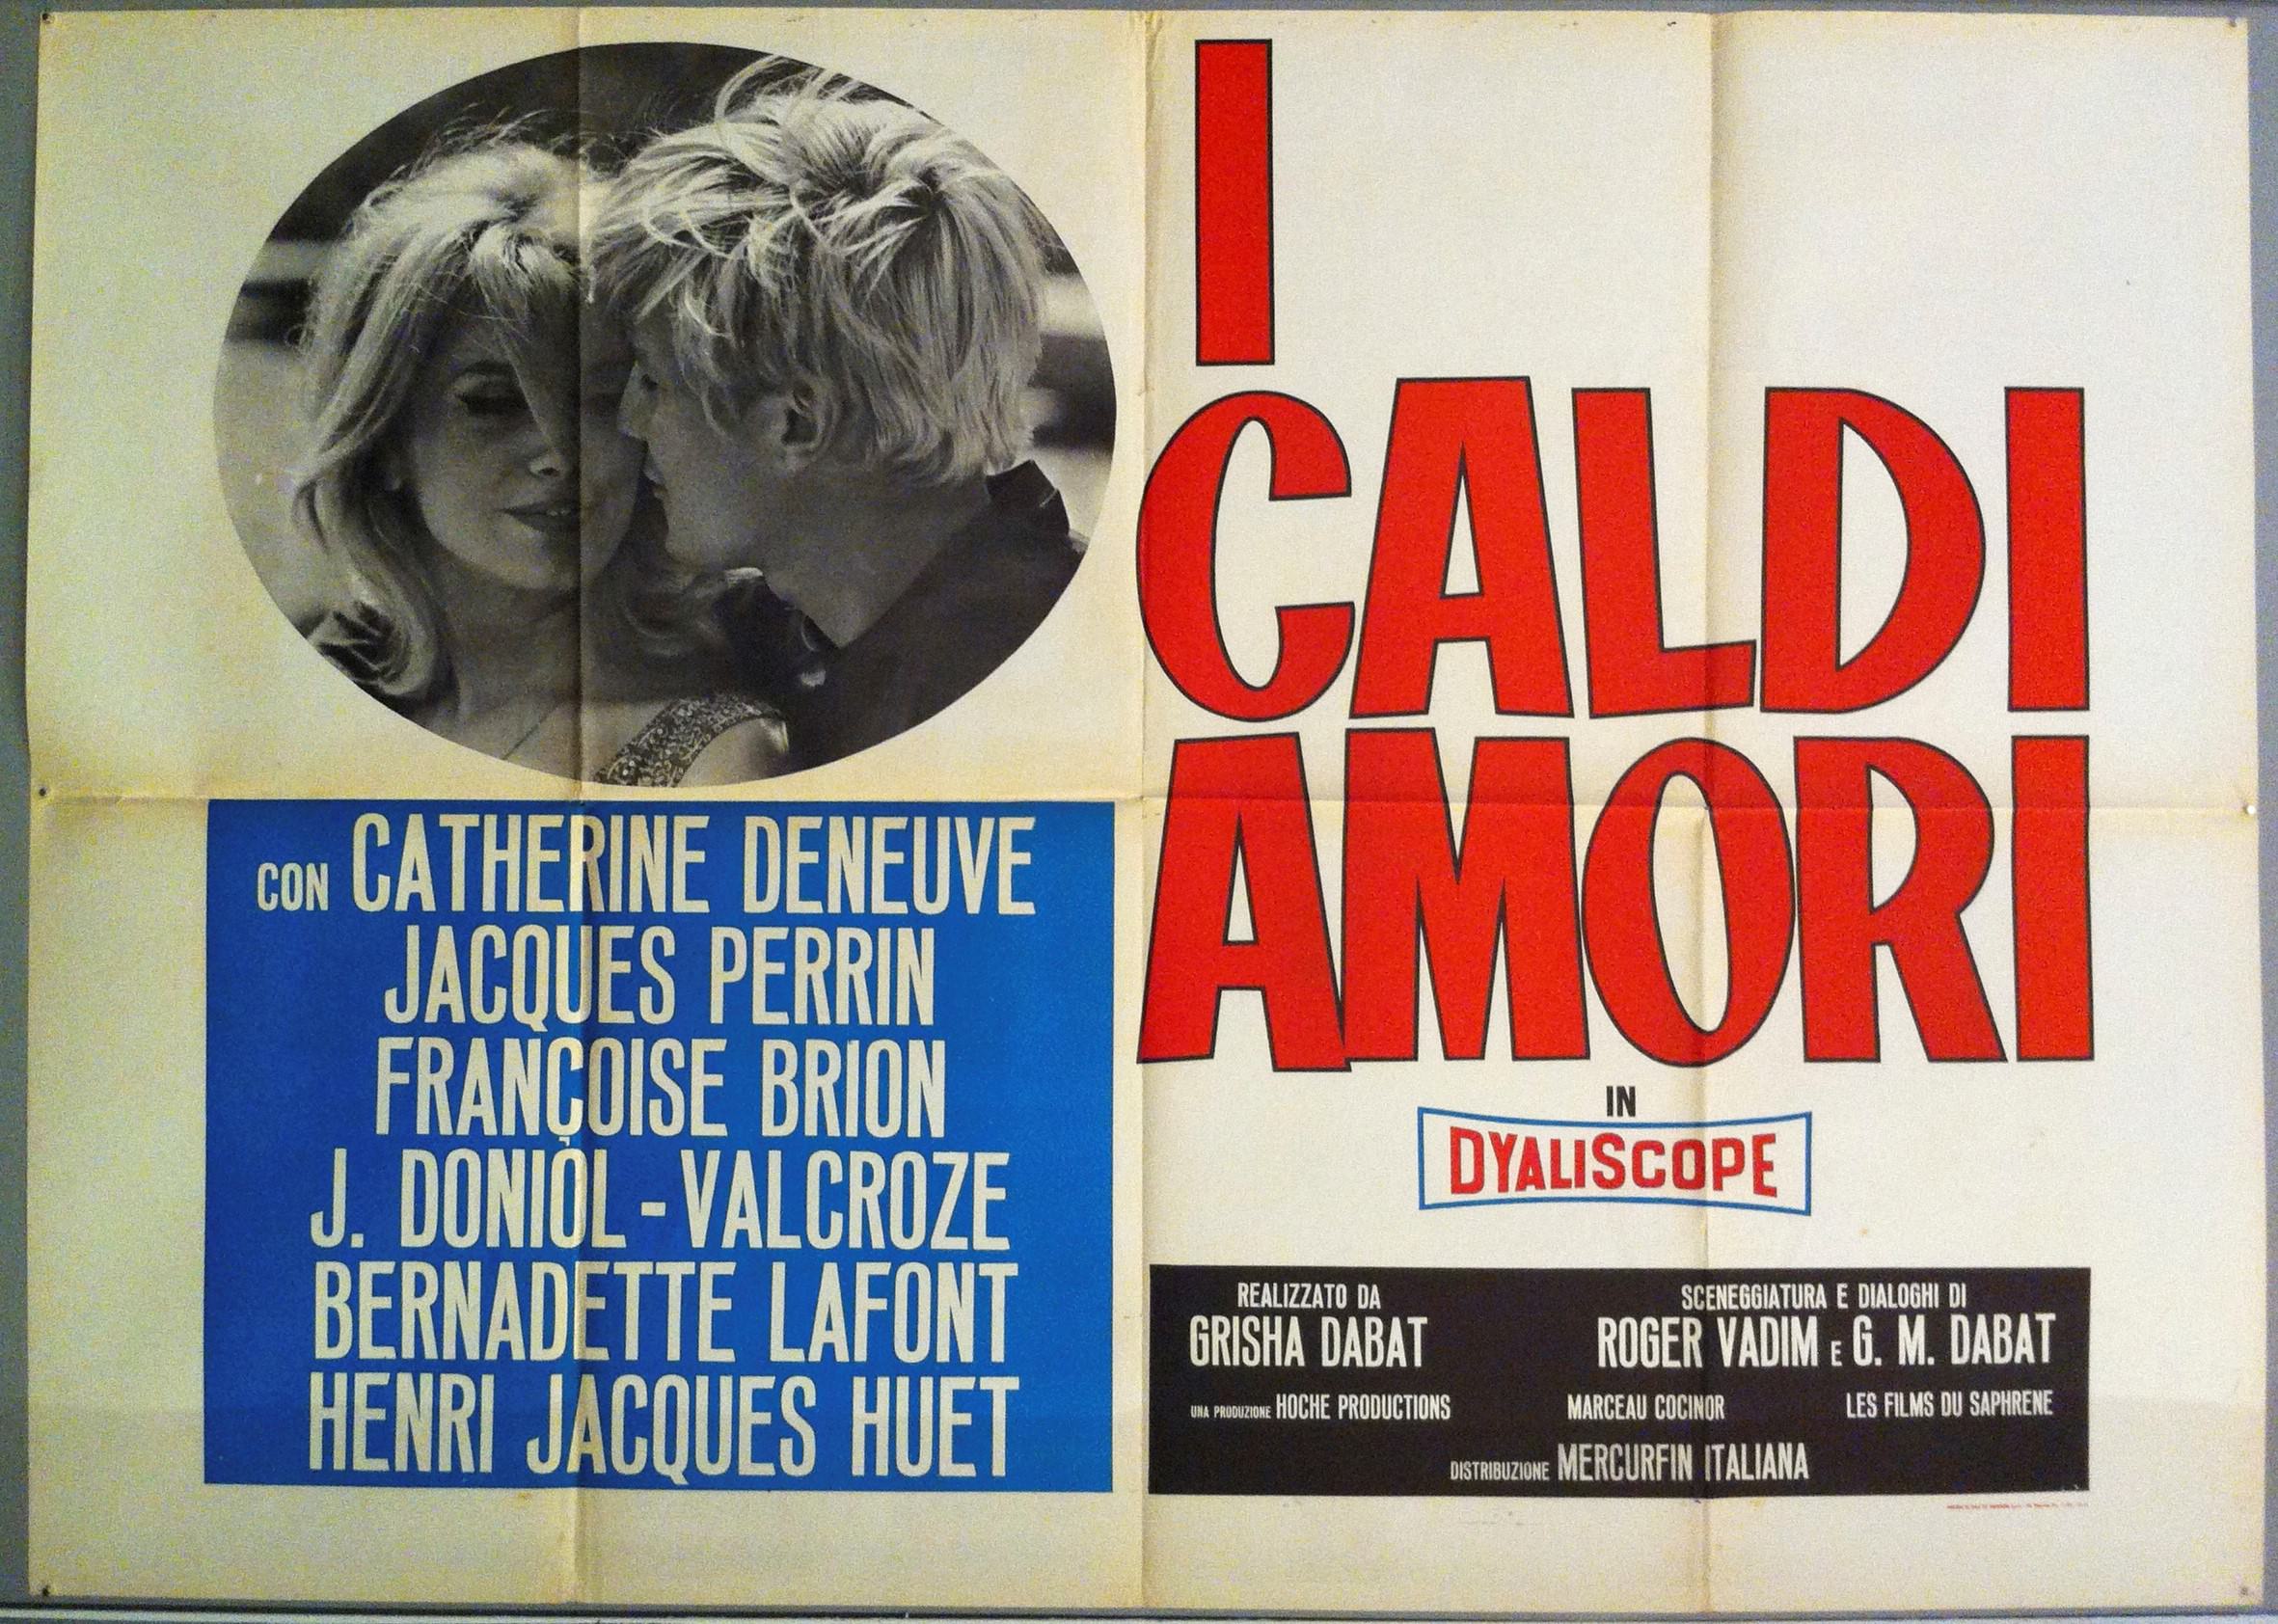 I Caldi Amori in Dyaliscope – Poster Museum